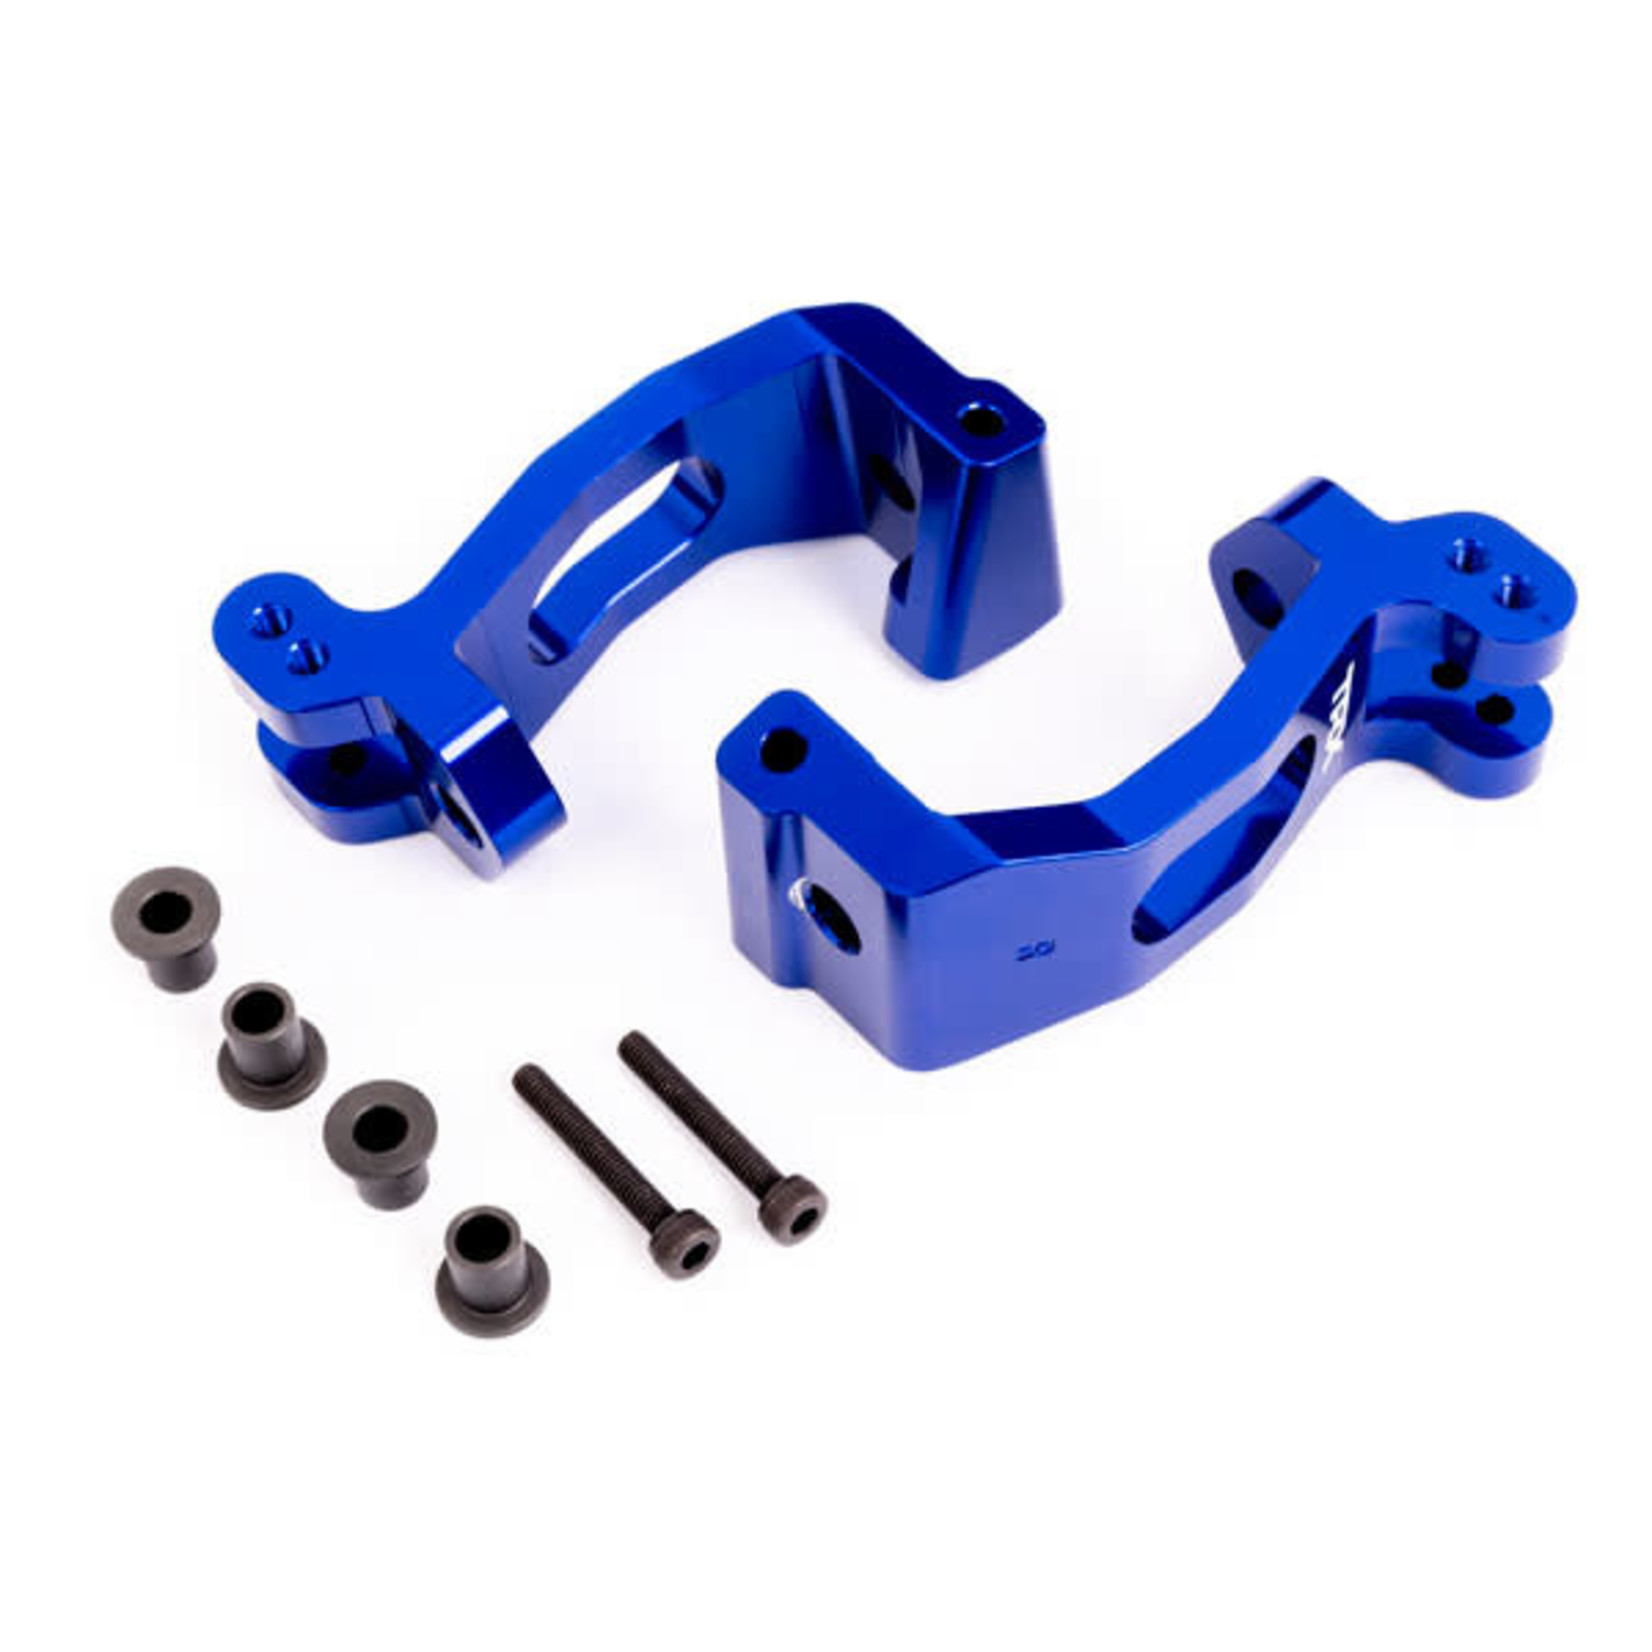 Traxxas Traxxas Sledge 6061-T6 Aluminum (Blue-Anodized) Caster Blocks L/R w/Kingpin Bushings #9532X